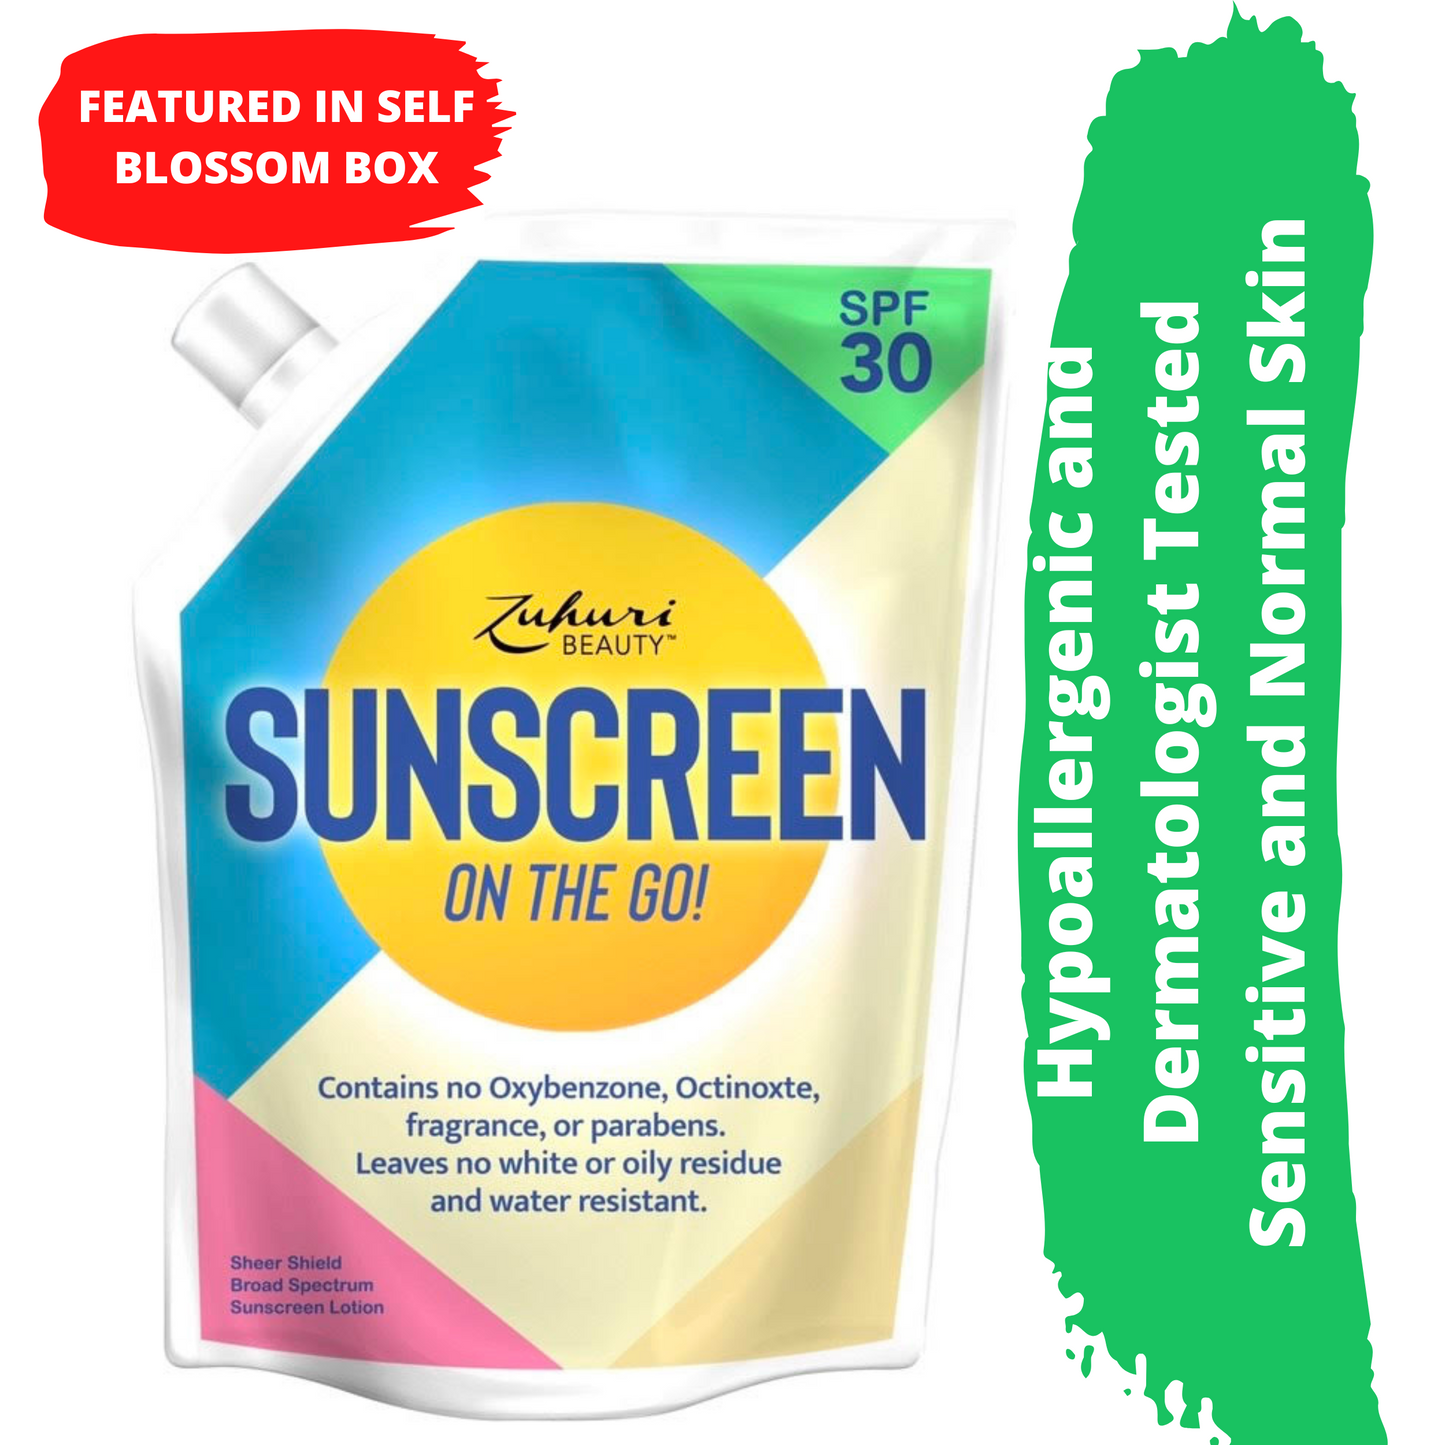 SPF30, Sunscreen for Black People, Sunscreen for the Beach, Best Sunscreen, Zuhuri Beauty Sunscreen, Water Resistant Sunscreen, Hypoallergenic Sunscreen, Sunscreen for Face and Body, Body Sunscreen, Good Sunscreen, Sunscreen for children